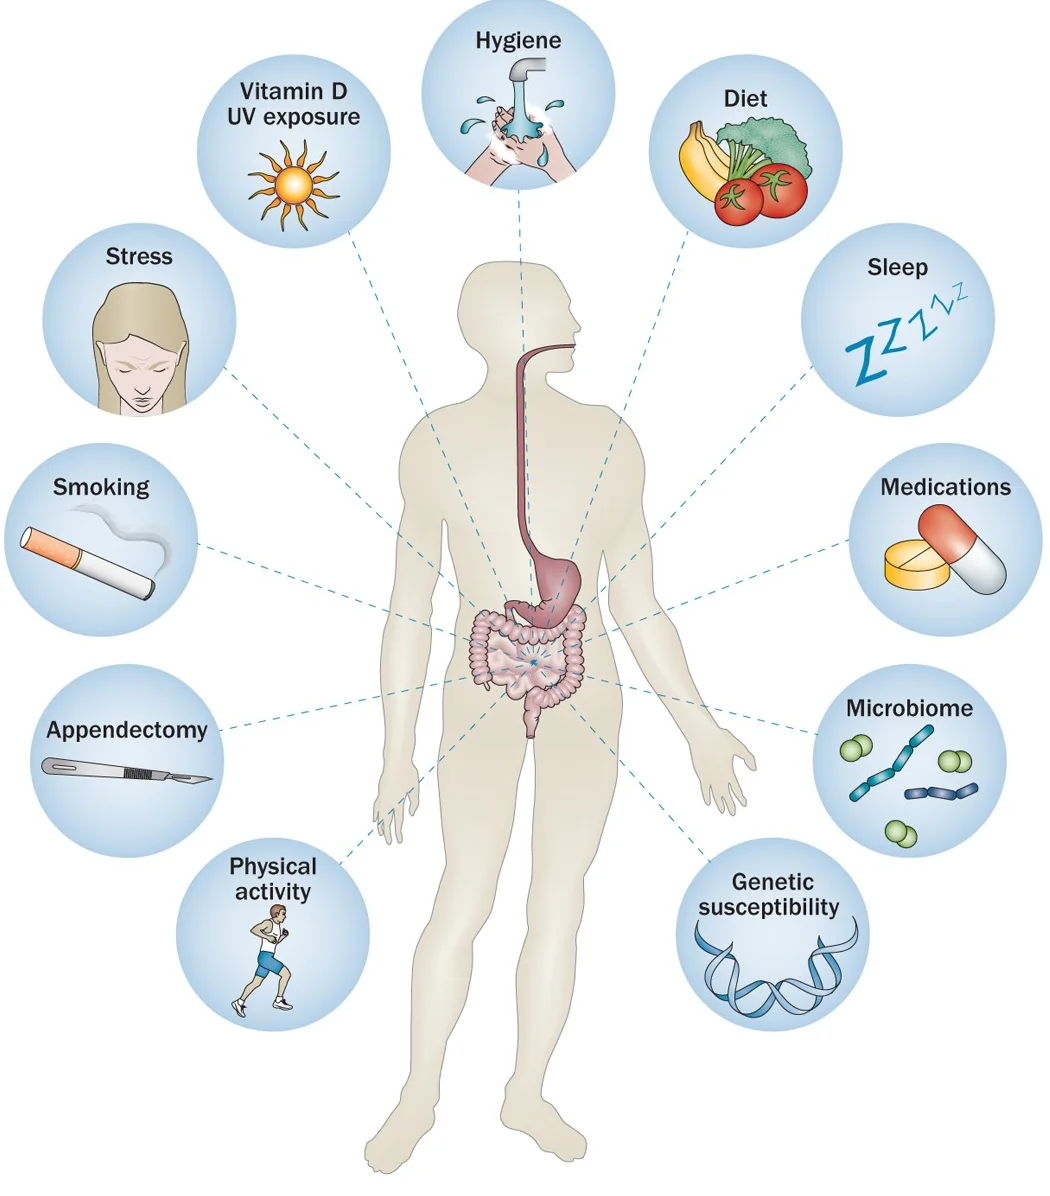 Key factors for digestive health